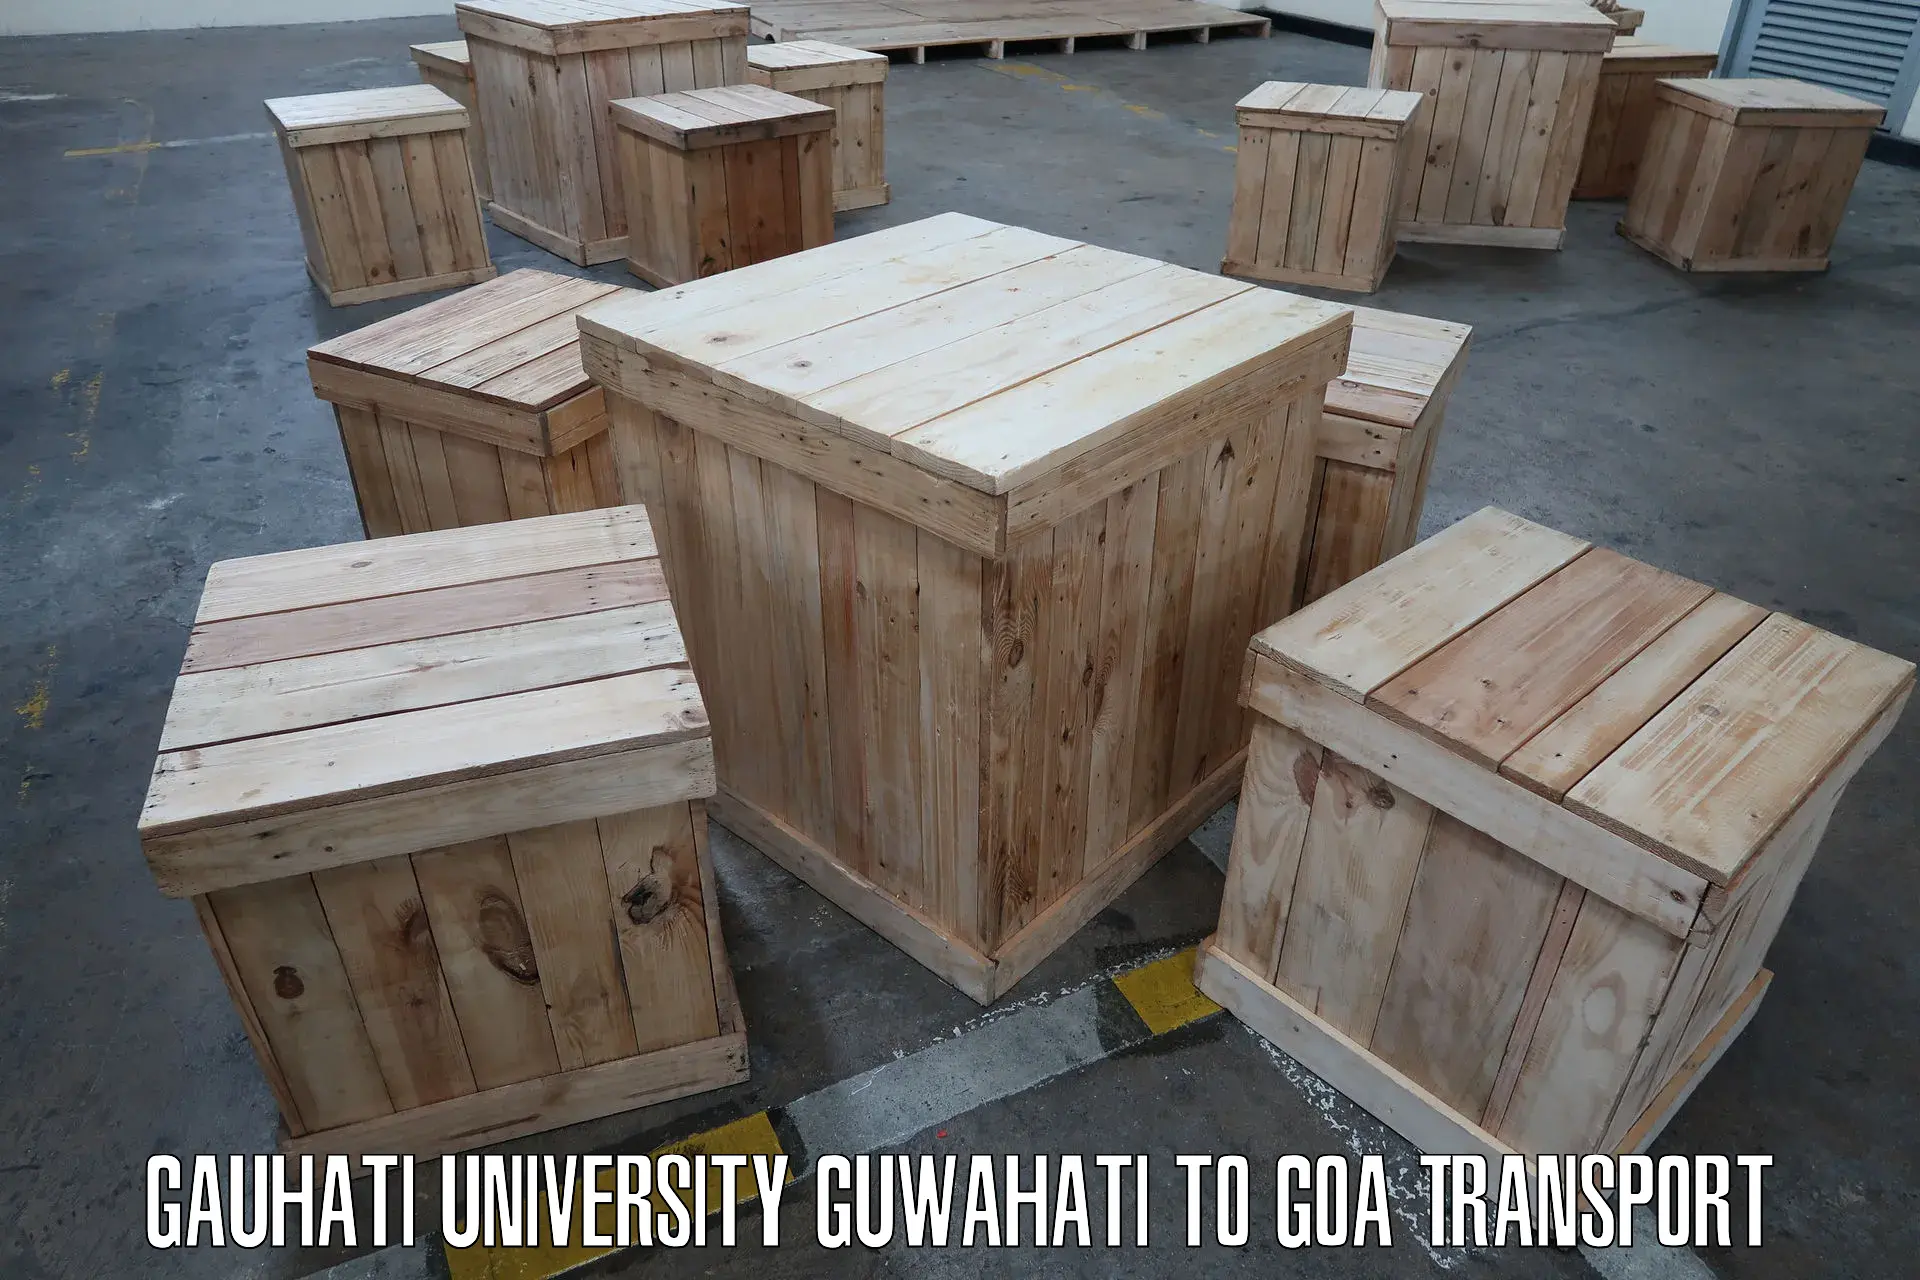 Daily parcel service transport Gauhati University Guwahati to Goa University